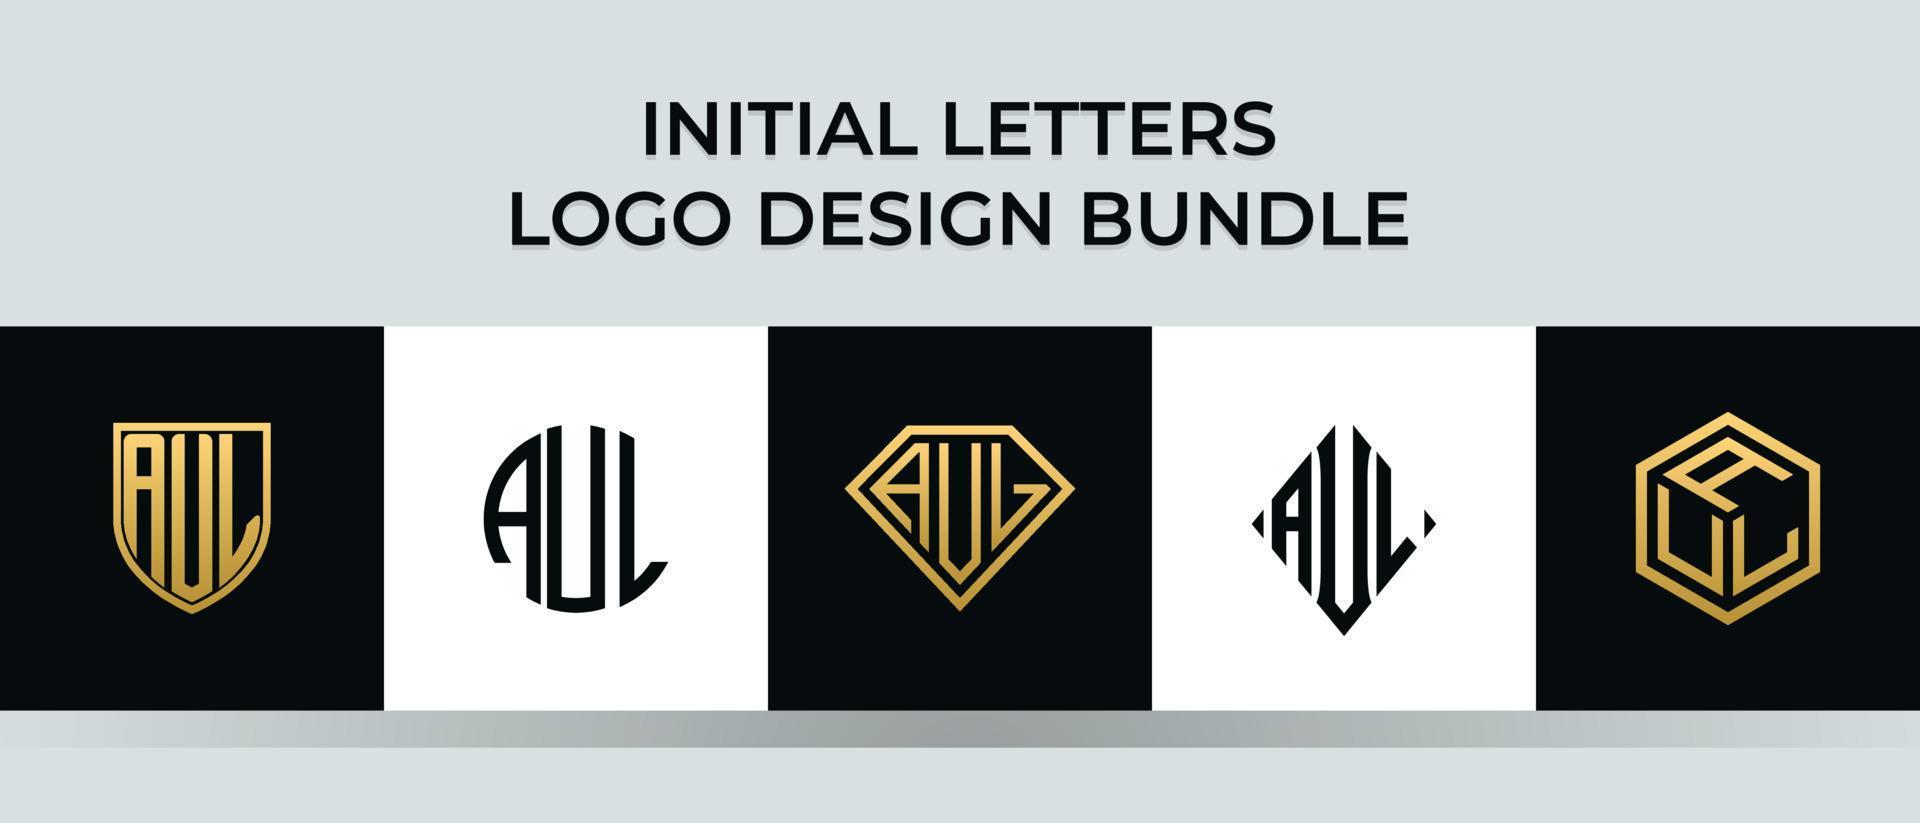 lettere iniziali aul logo design bundle vettore